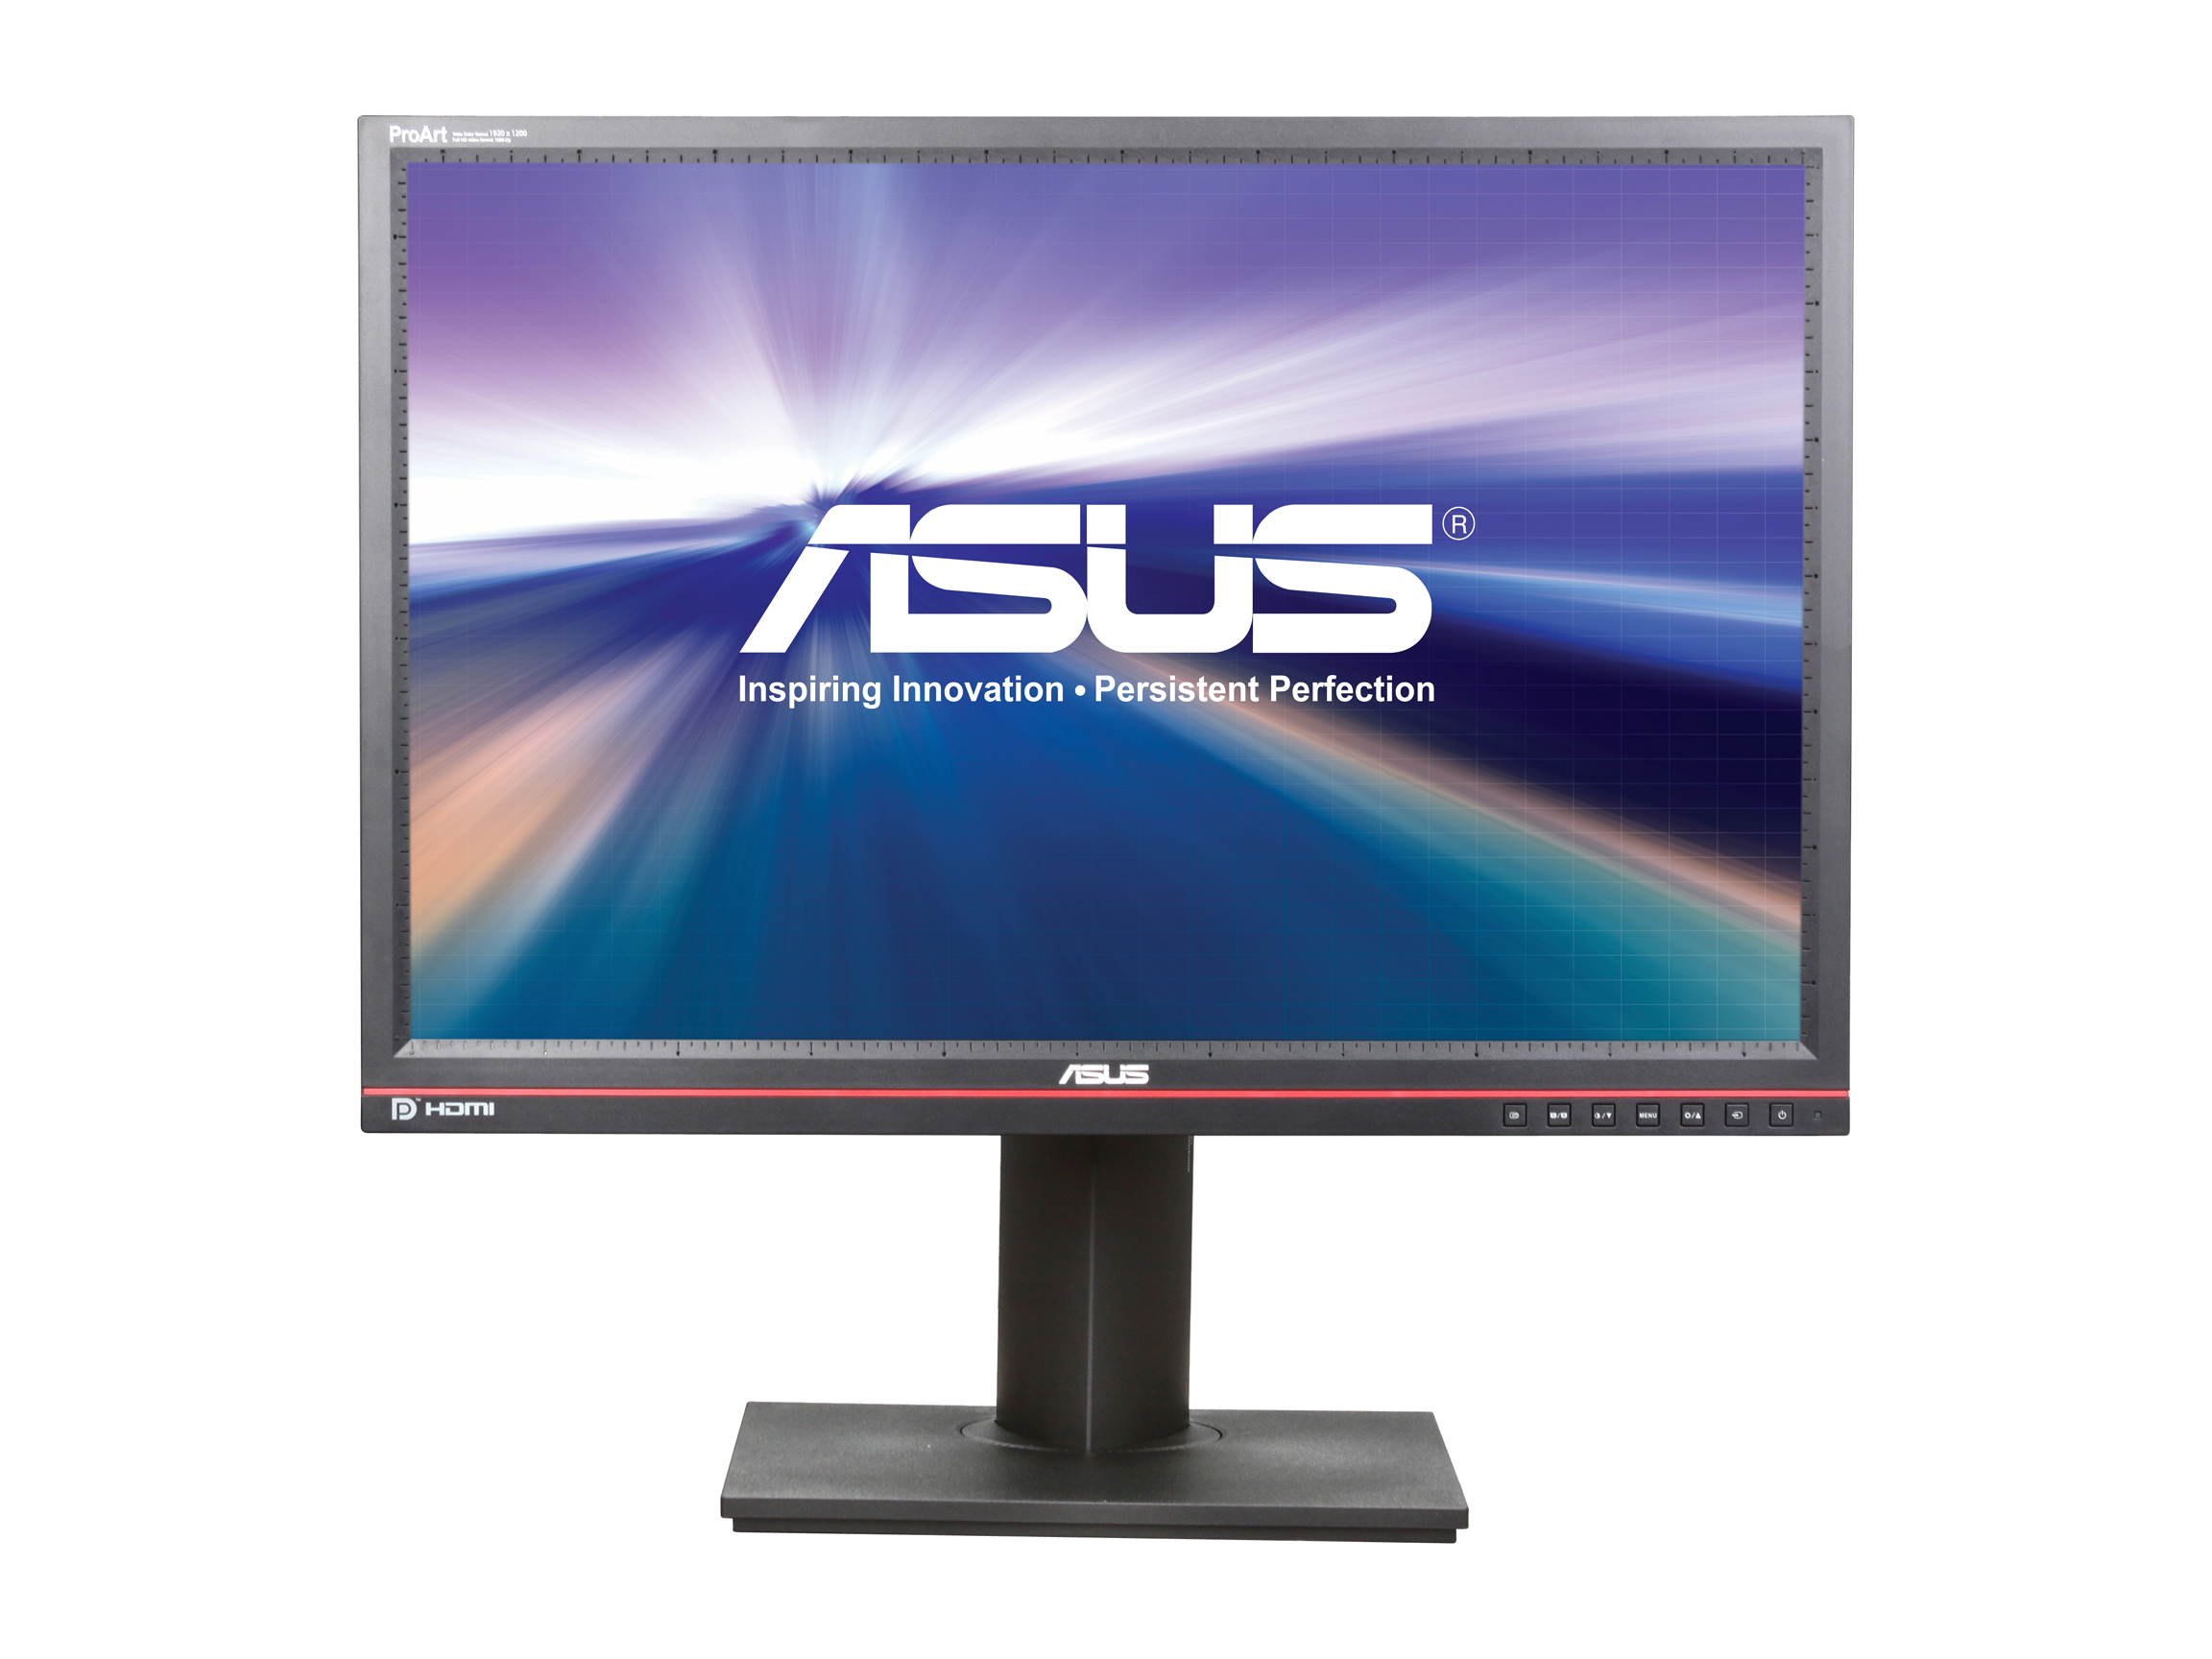 ASUS ProArt Series PA246Q Black 24.1" 6ms P IPS Height/Swivel/Pivot Adjustable LCD Monitor w/2 USB hub, Card Reader & Display port 400cd/m2 50000:1 DCR